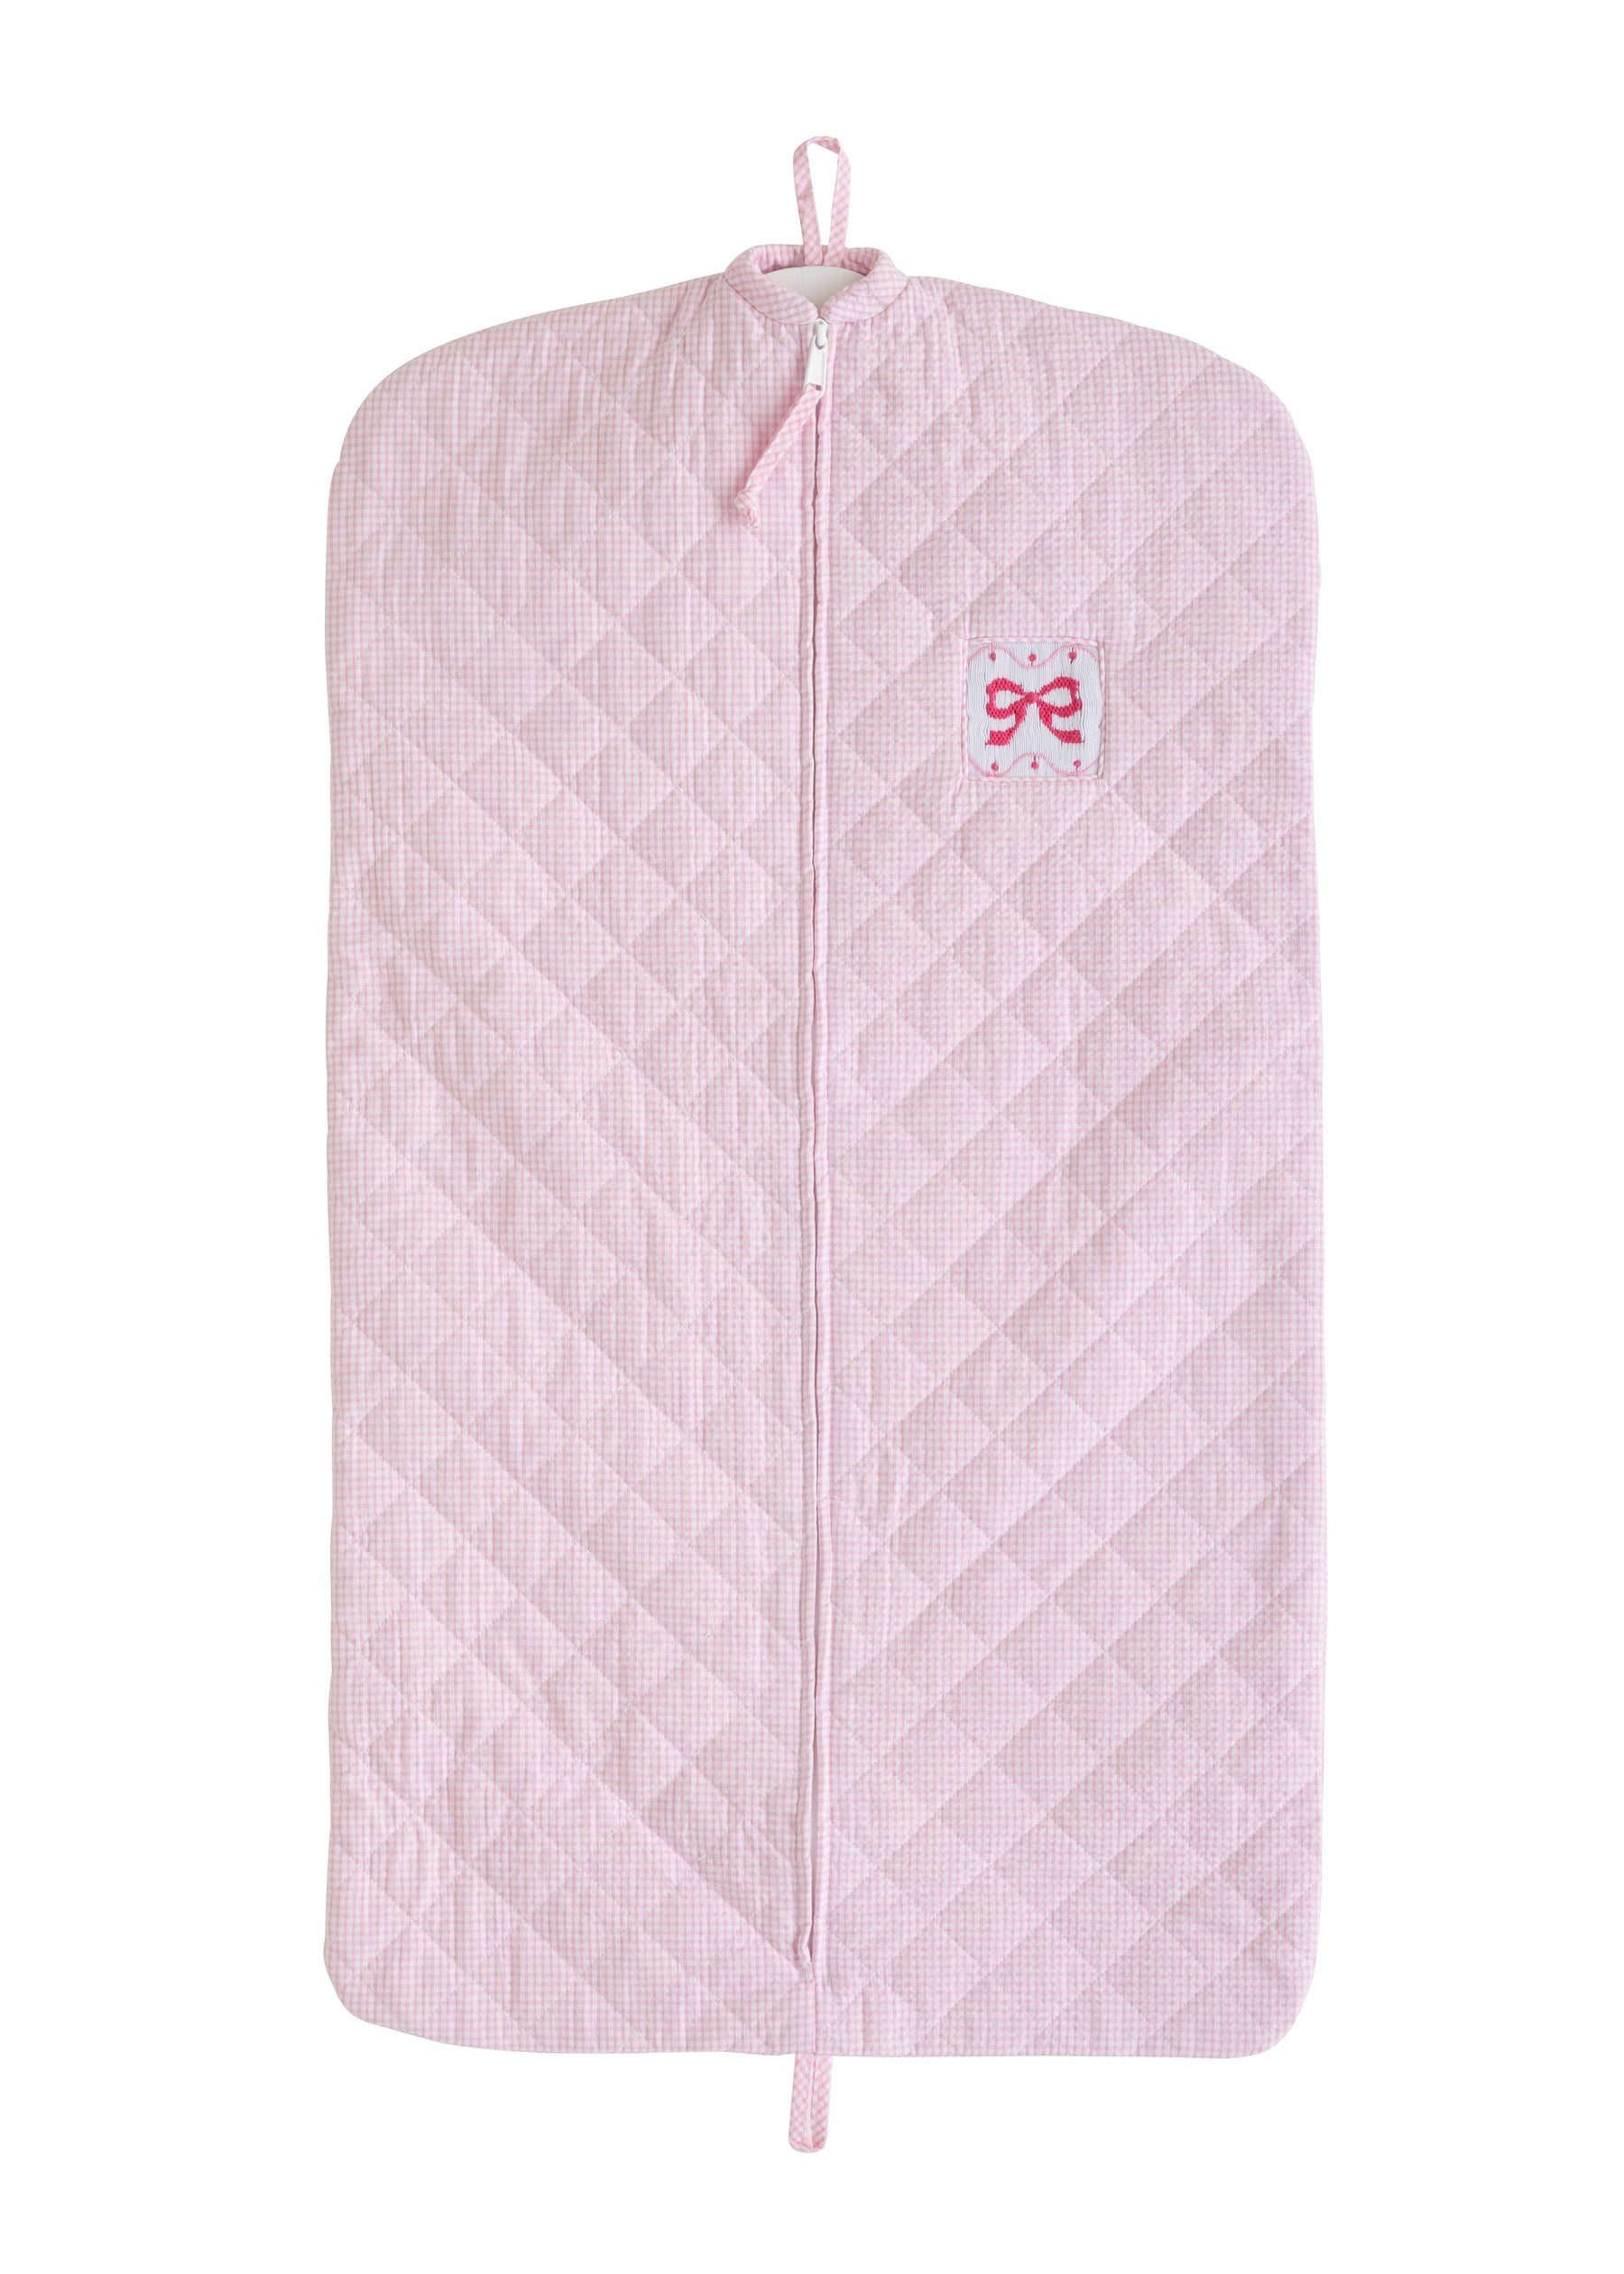 seguridadindustrialcr classic children's luggage pink bow garment bag